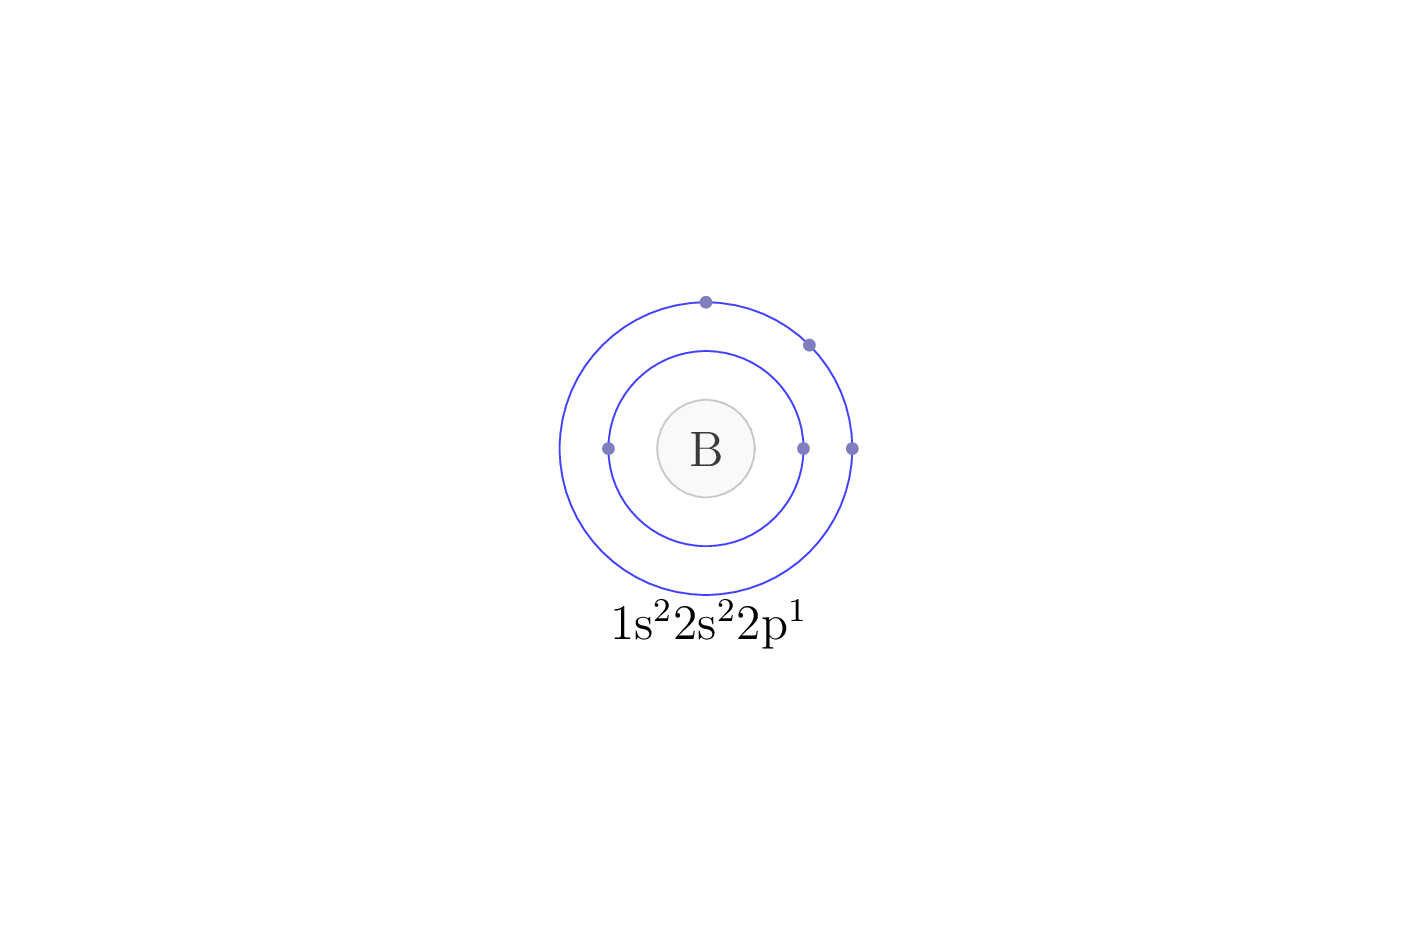 electron configuration of element B